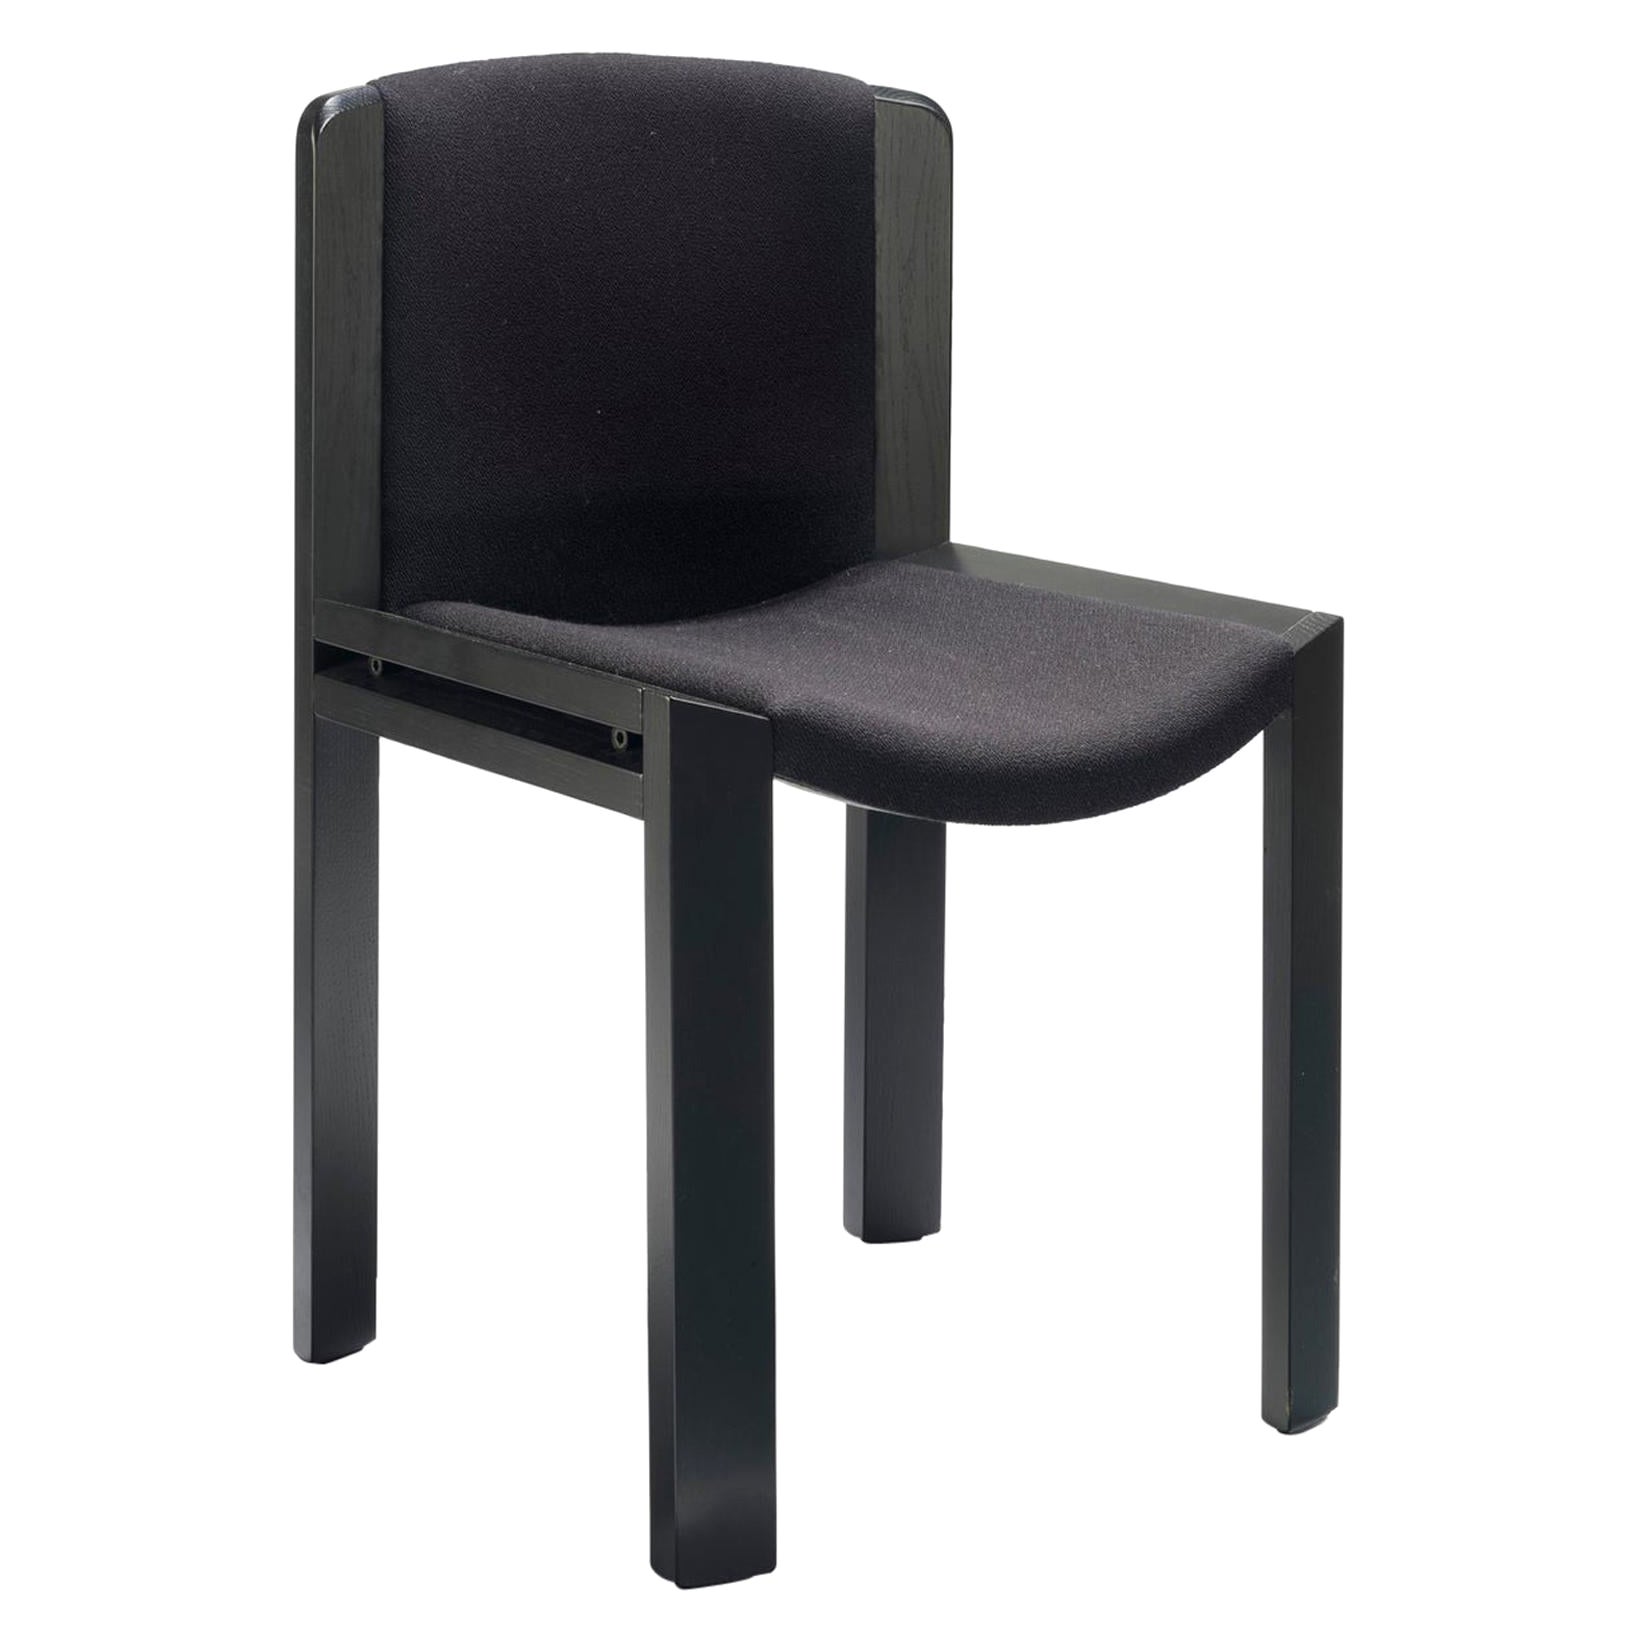 Joe Colombo 'Chair 300' Wood and Kvadrat Fabric by Karakter For Sale